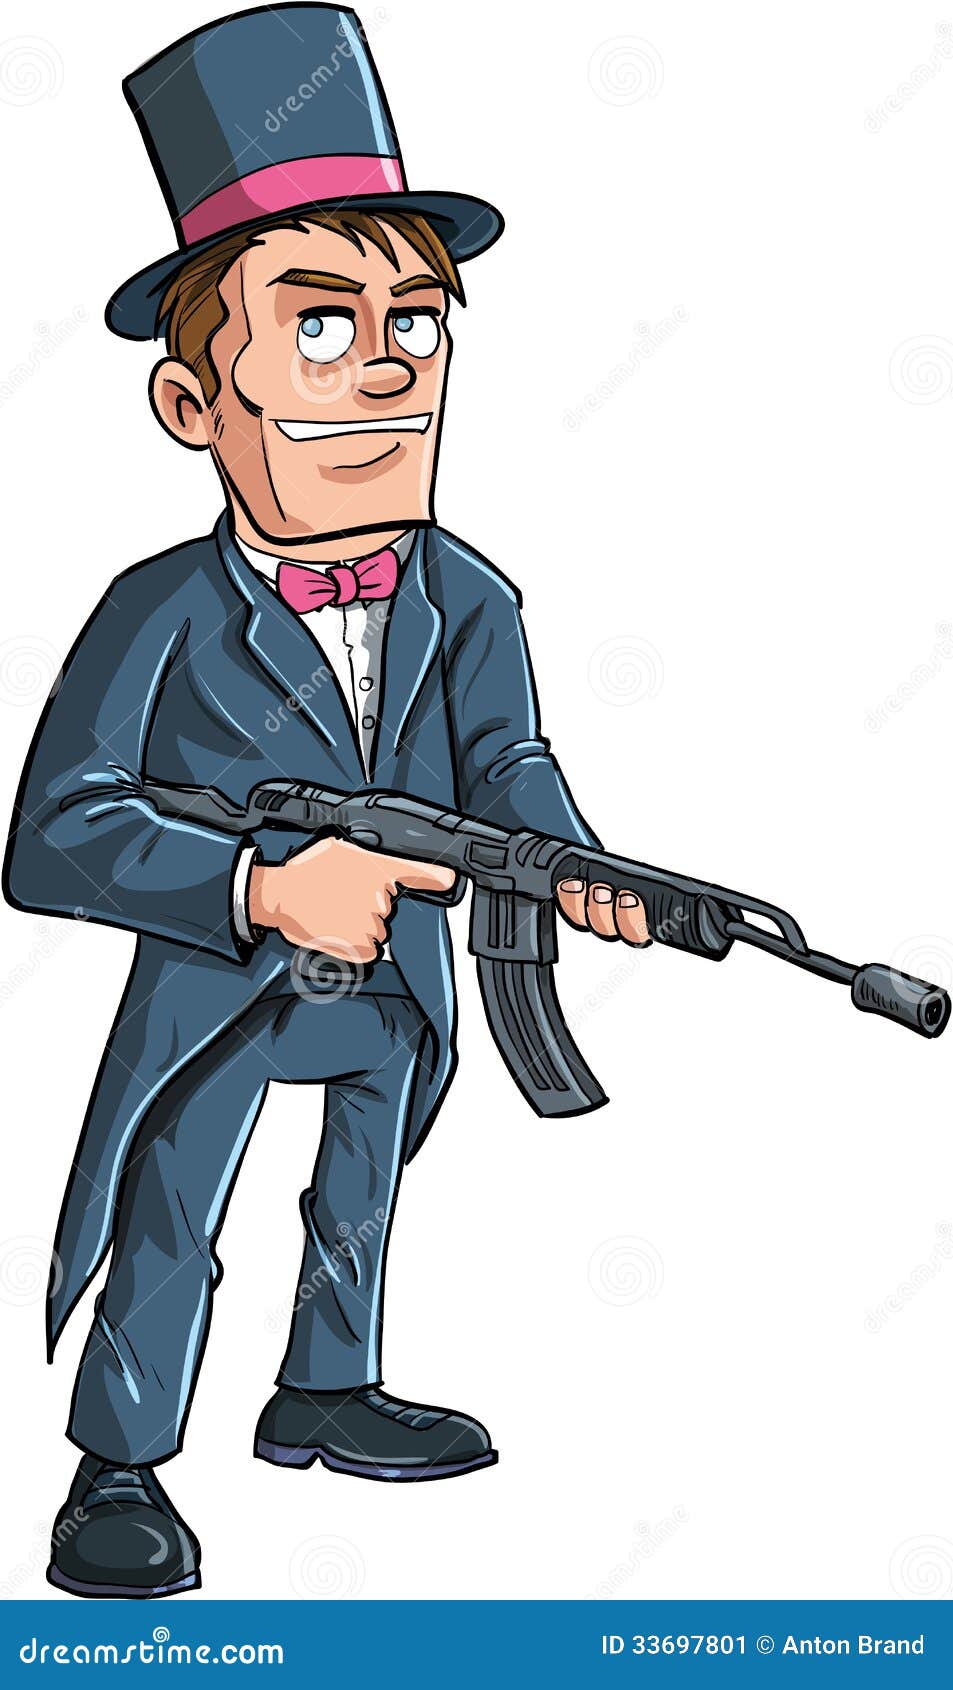 Cartoon Groom With A Machine Gun Stock Image - Image: 33697801